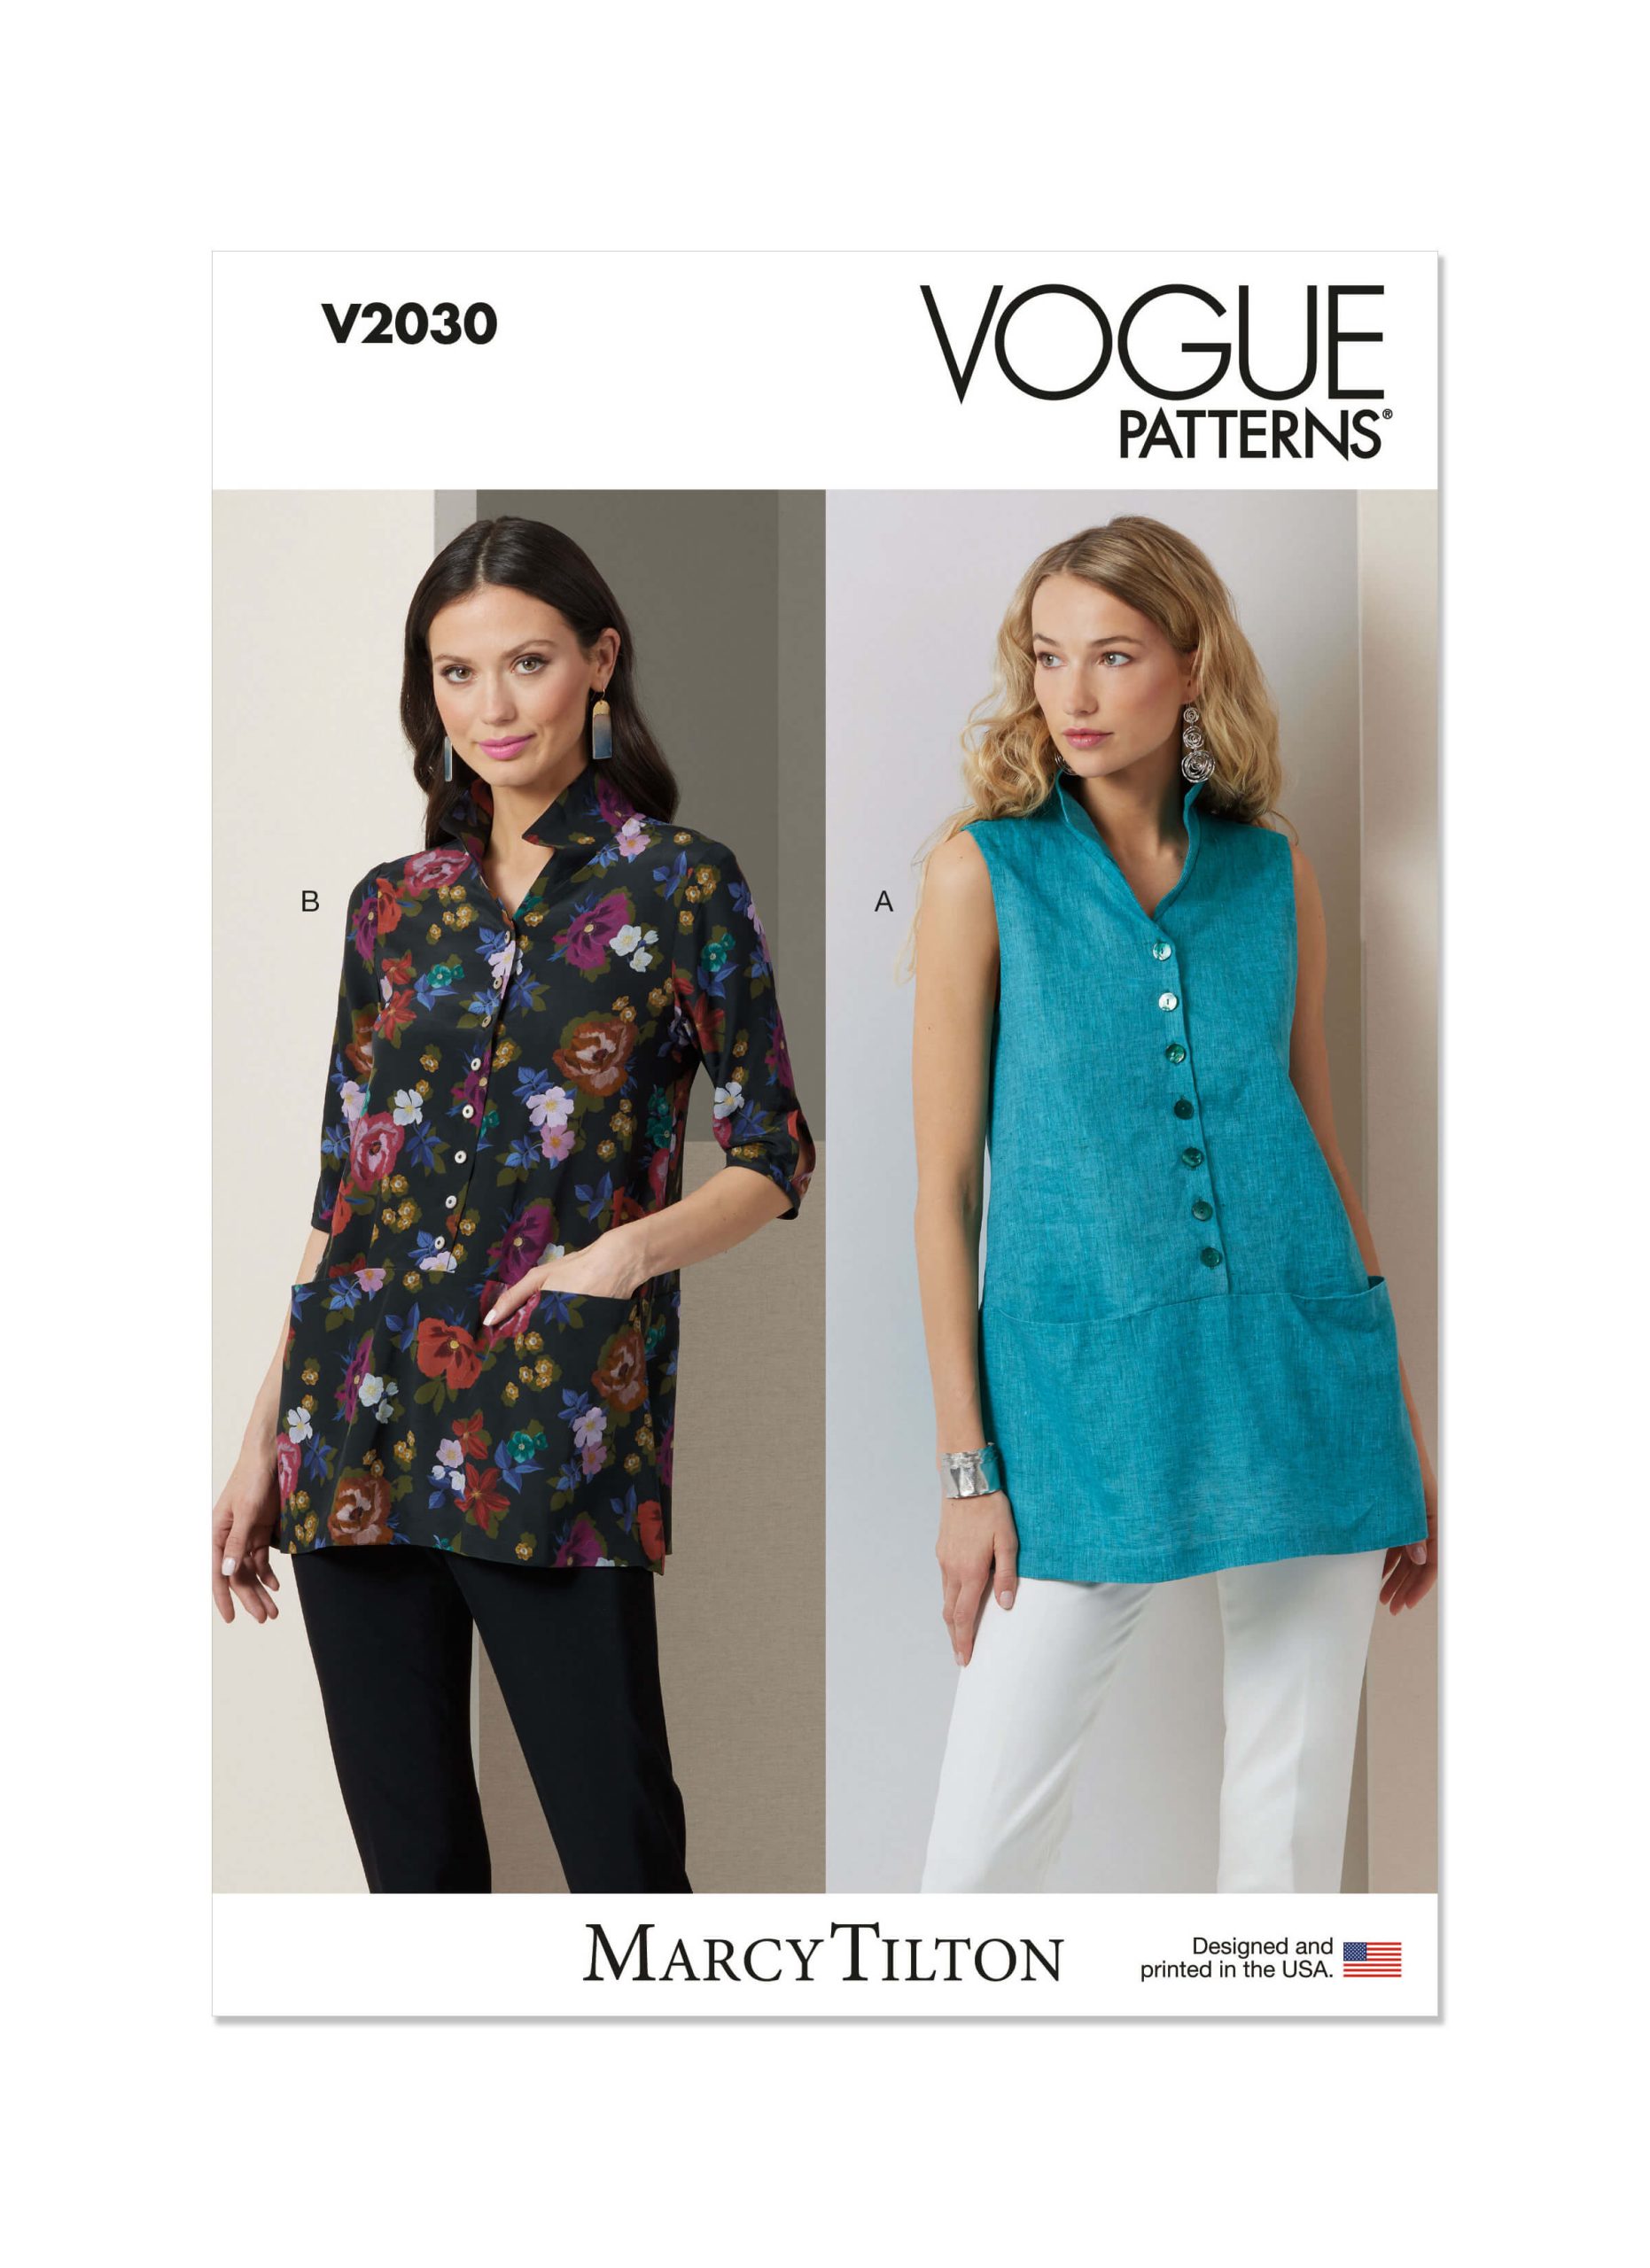 Vogue Patterns V2030 Misses' Tunics by Marcy Tilton